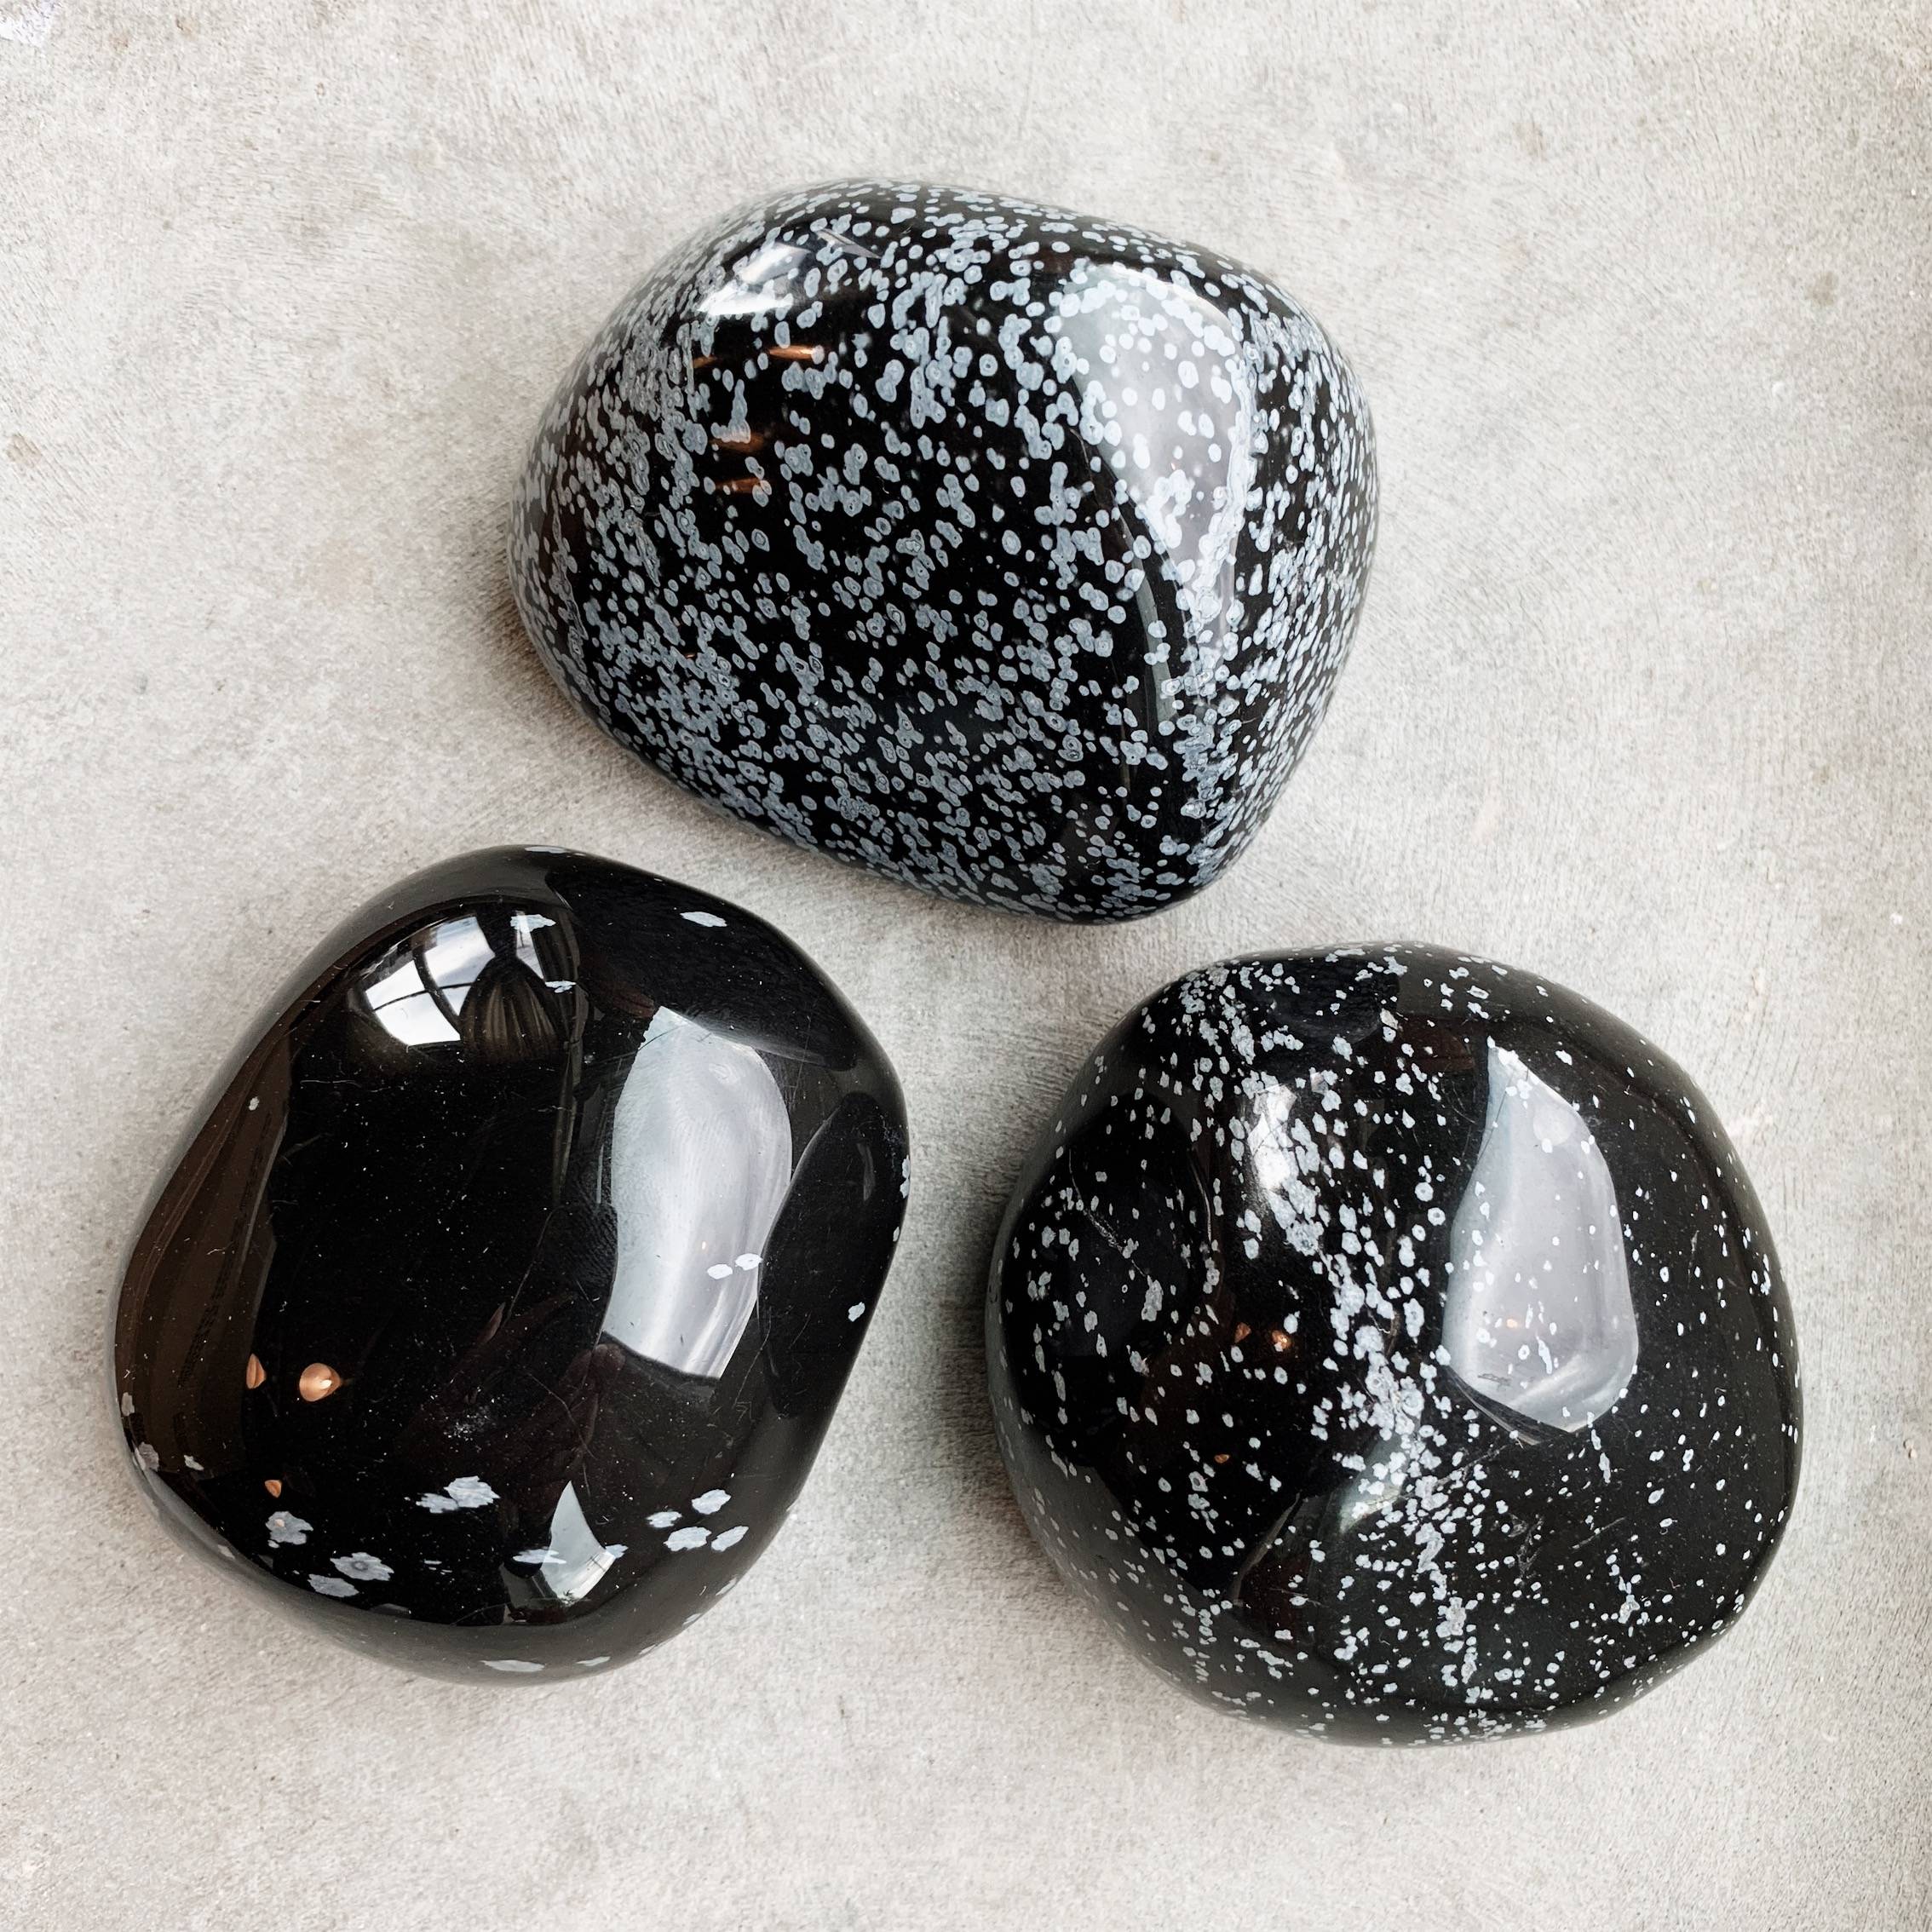 Snowflake Obsidian Palm Stones - a protective stone